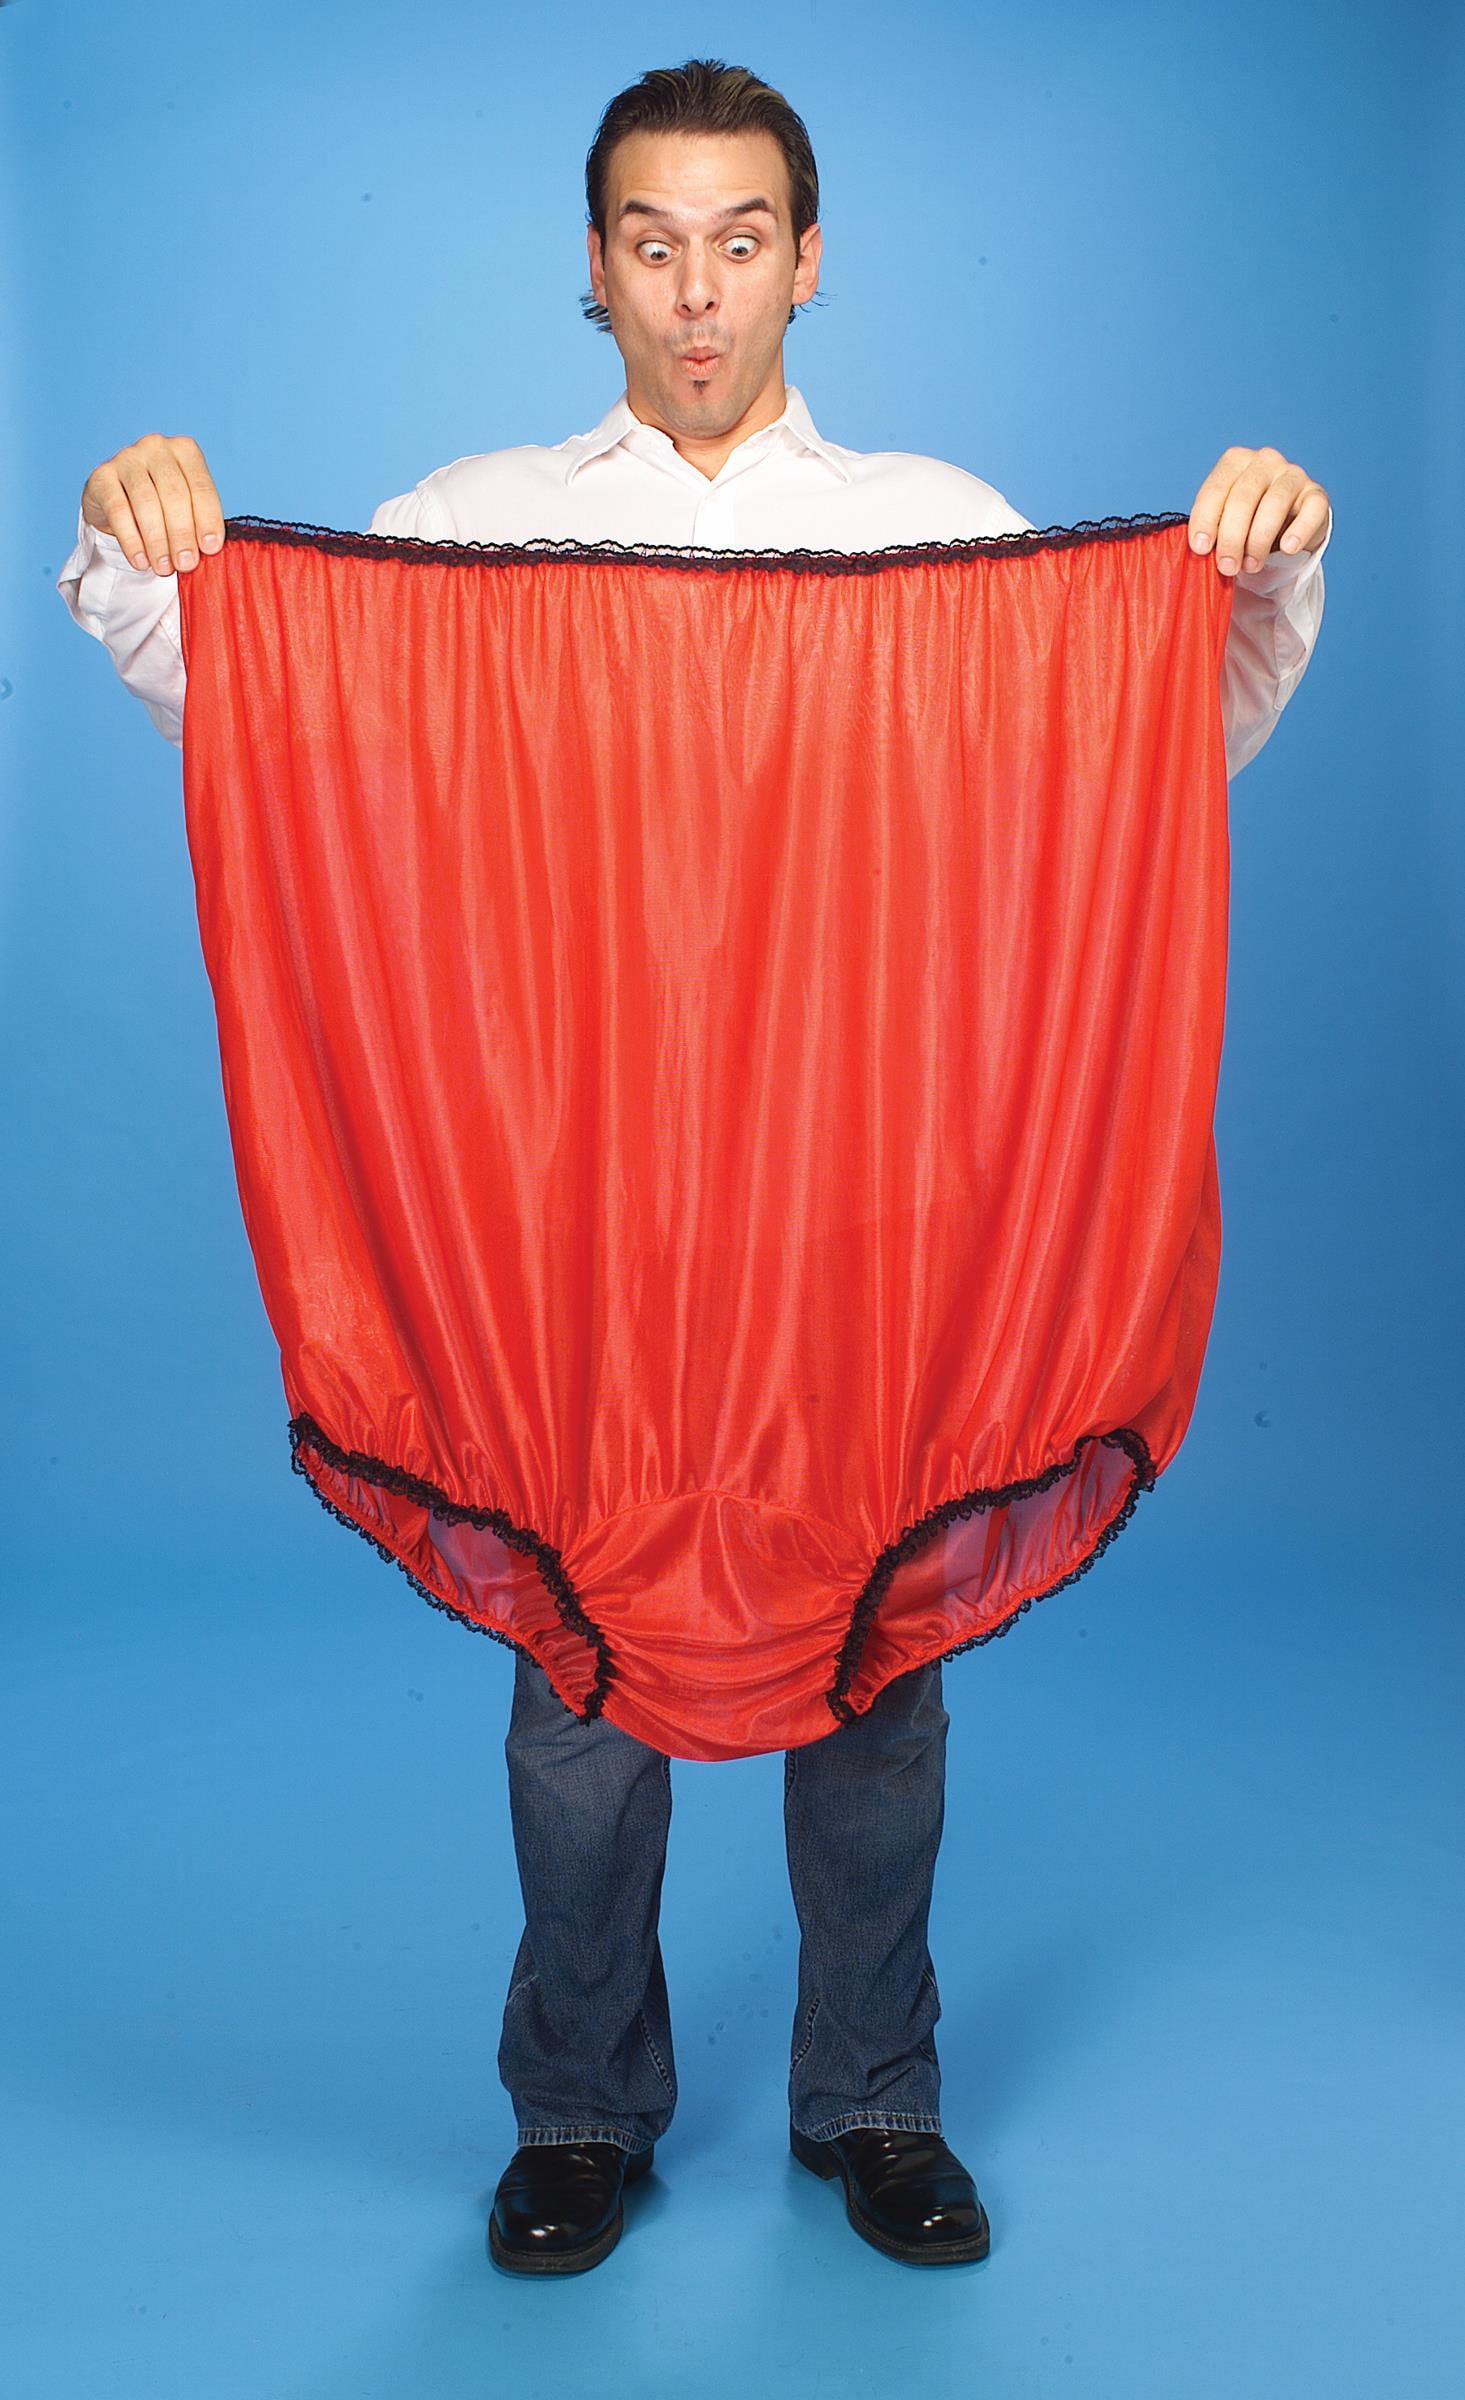 Womens Mens Super Big Undies Funny Joke Gag Gift Giant Oversized